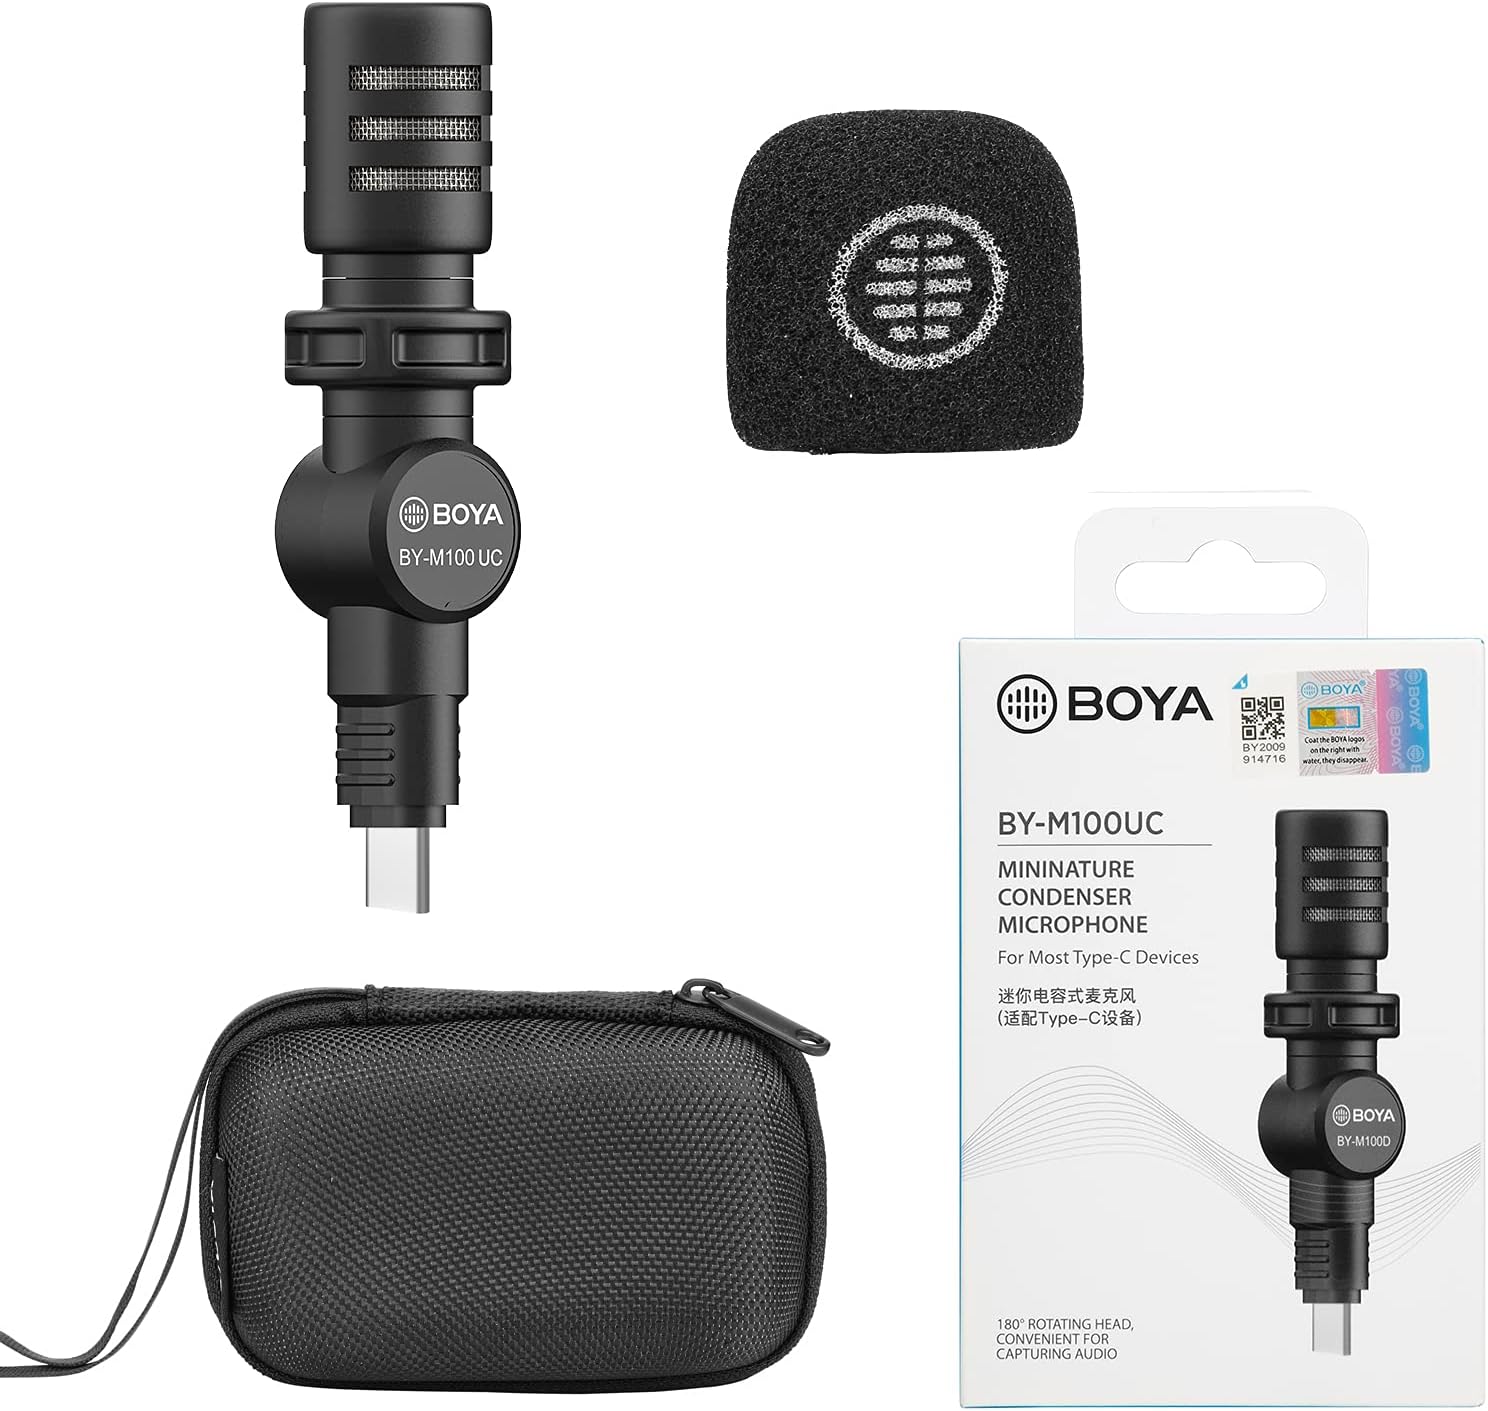 Boya By-M100Uc Type-C Miniature Condenser Microphone